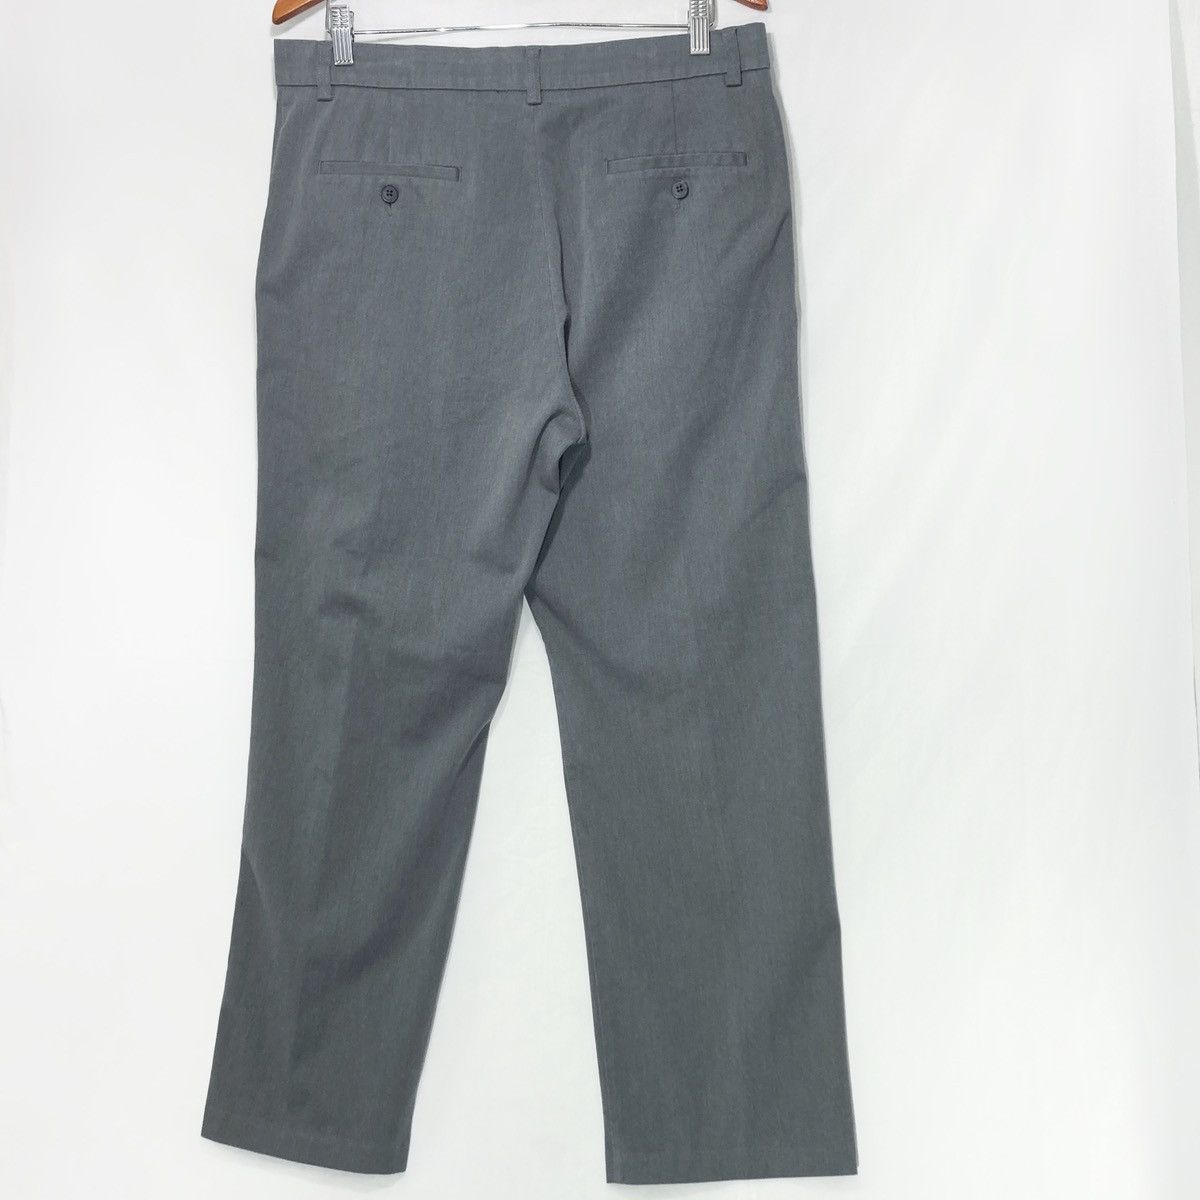 Haggar HAGGAR Men’s Stretch Pants Comfort Expandimatic Classic Fit Size 34R - 2 Preview